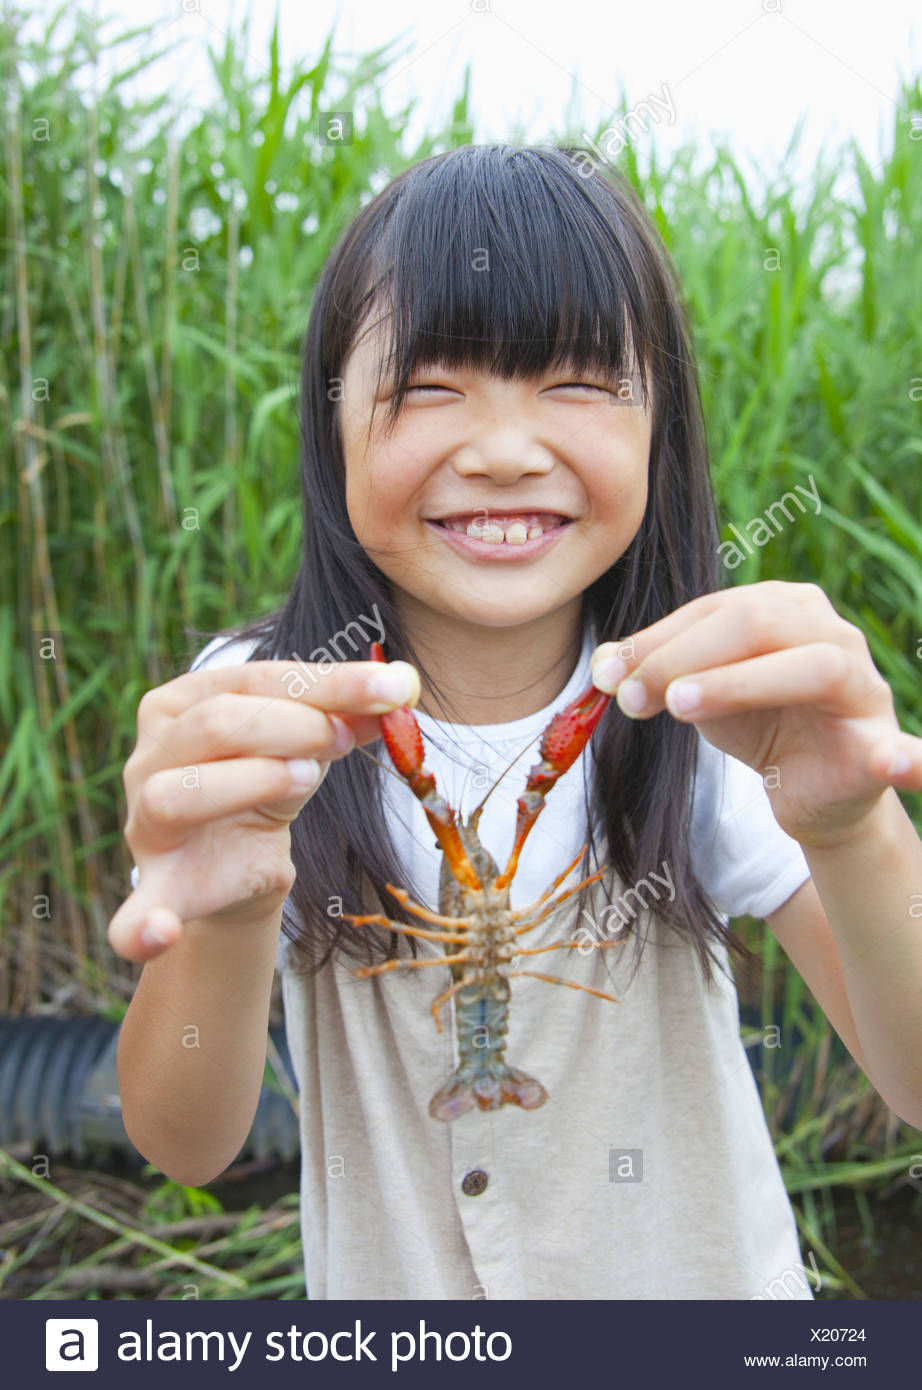 girl-holding-a-crayfish-X20724.jpg